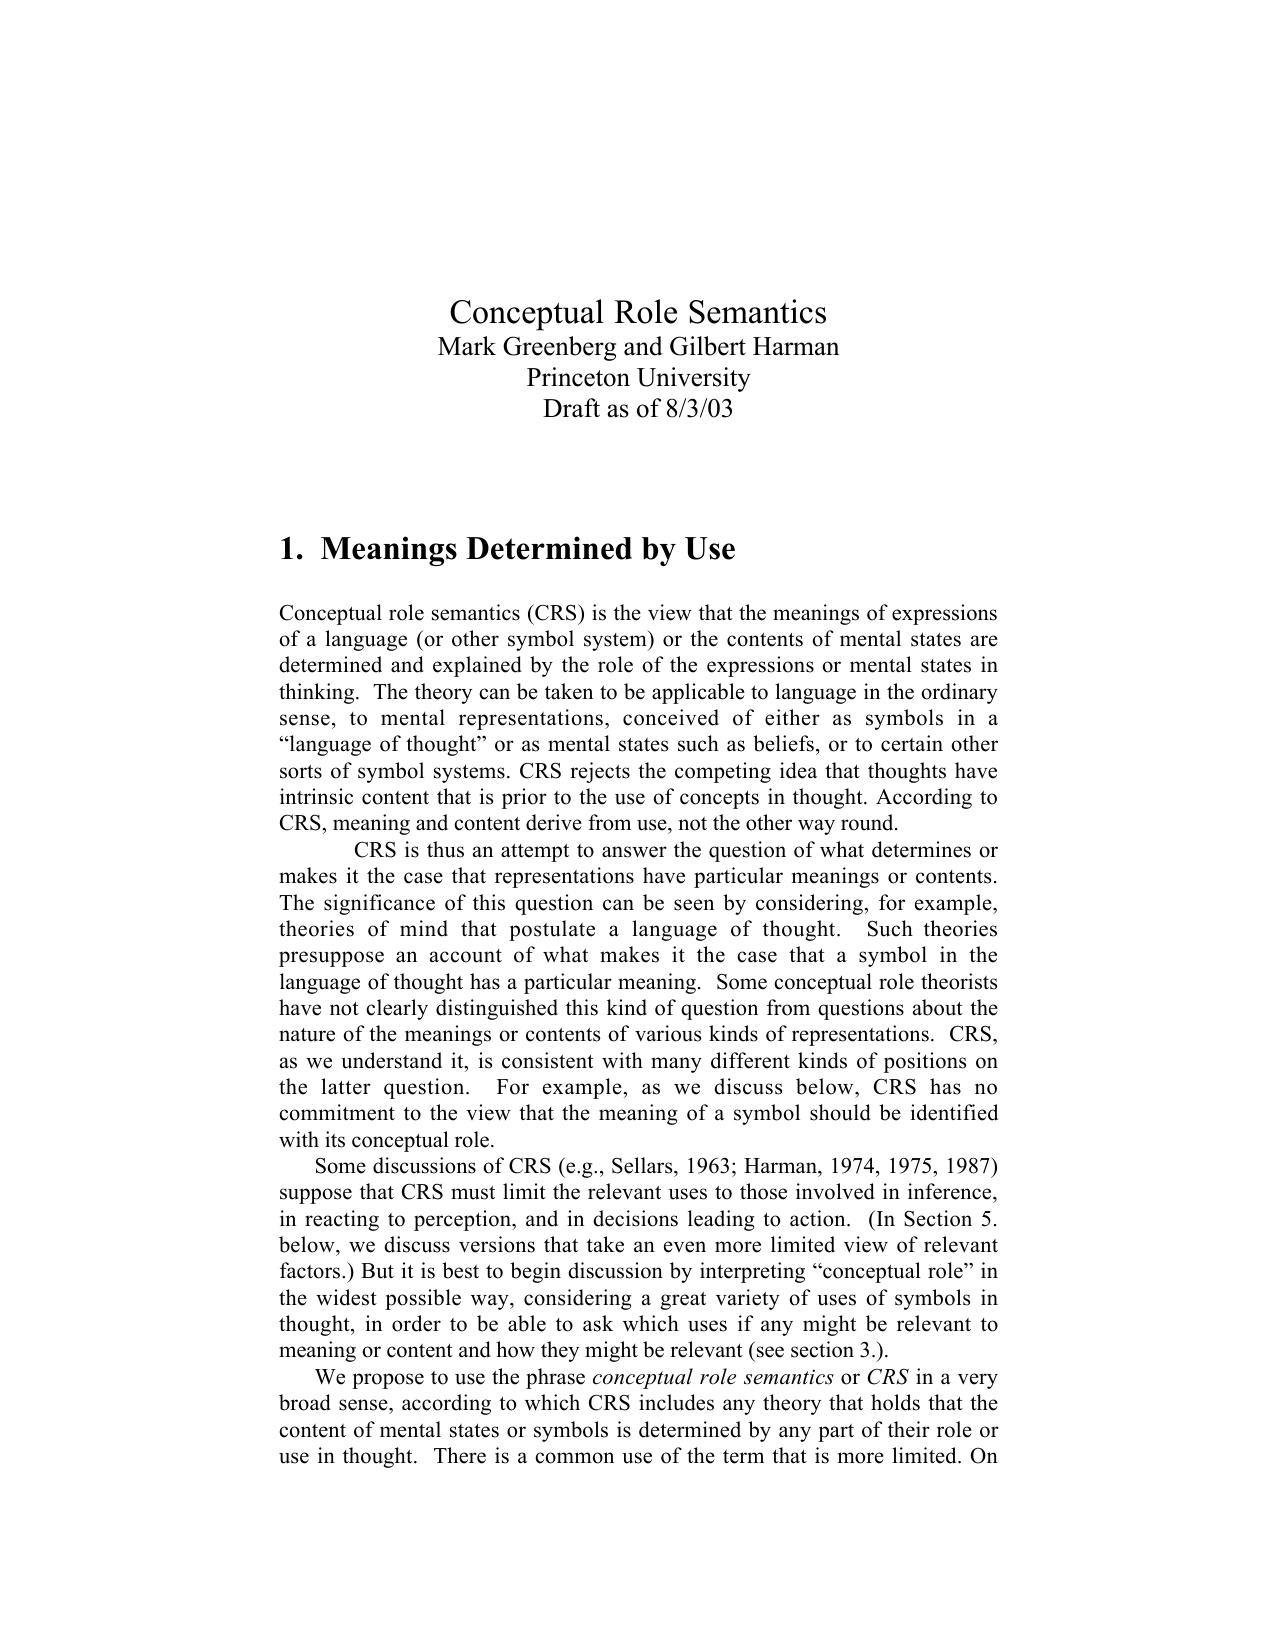 The Oxford Handbook of Philosophy of Language - Greenberg Harman - Conceptual Role Semantics - Paper